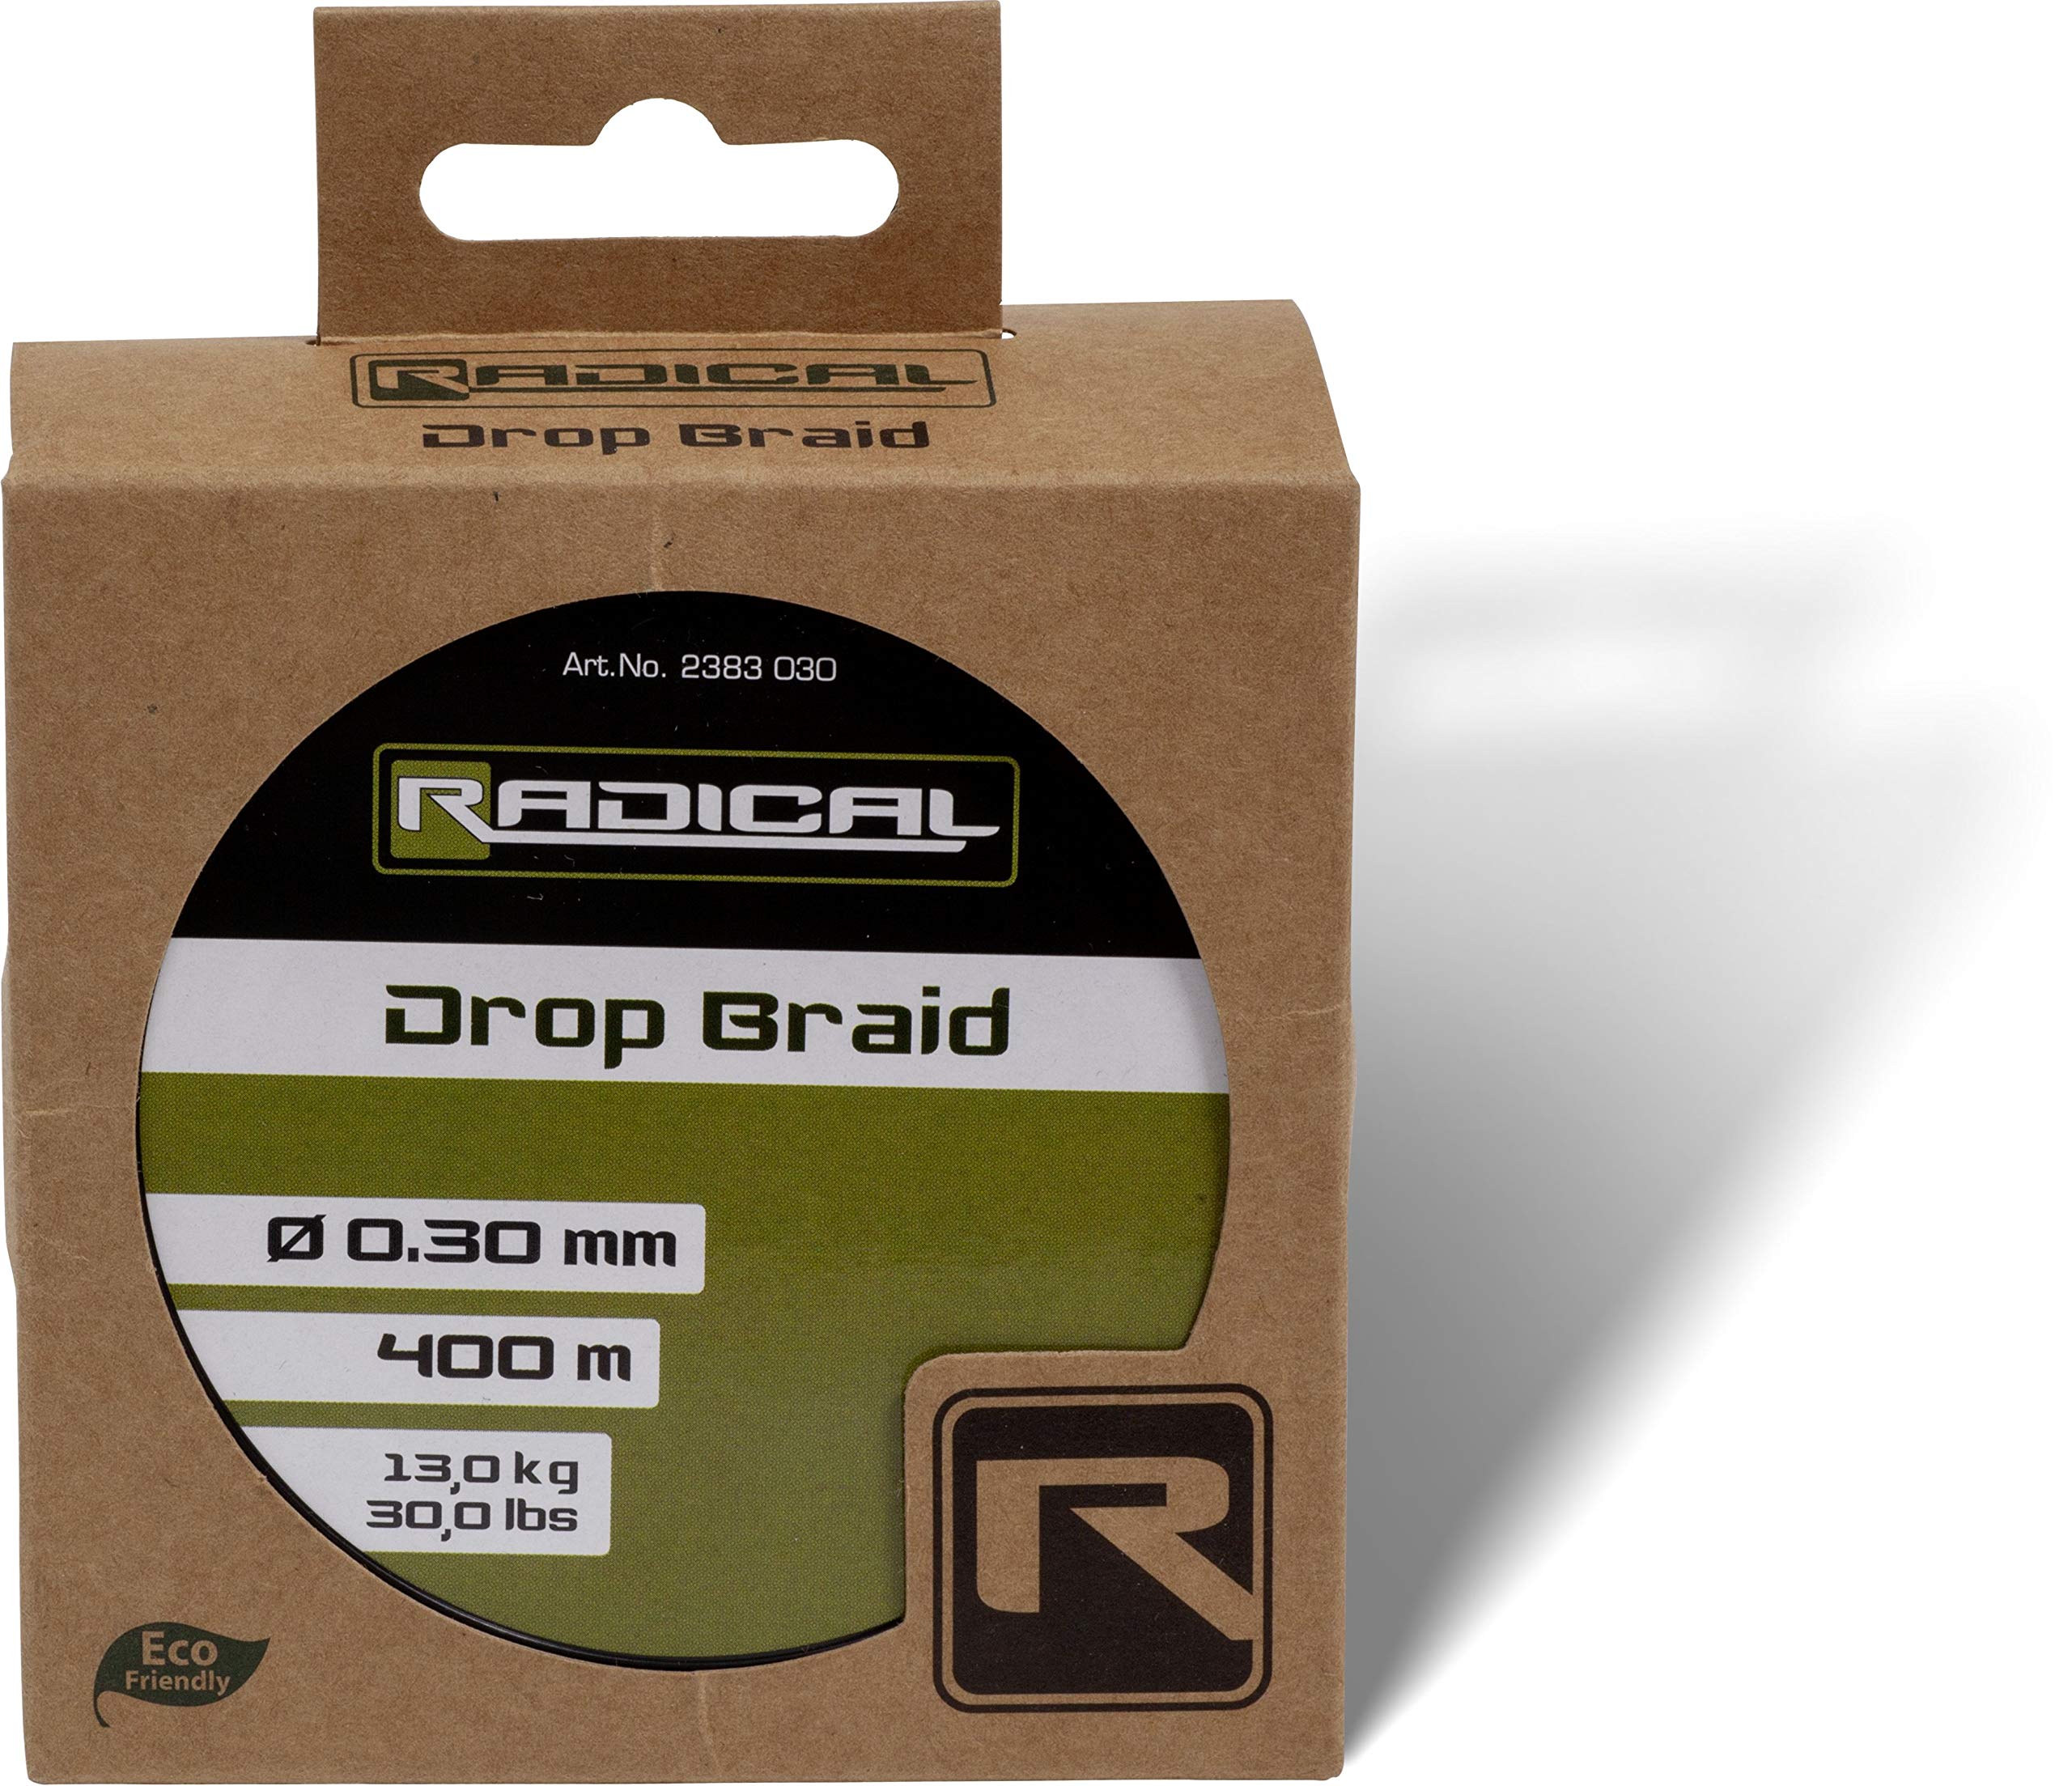 Radical Ø0,25mm Drop Braid 400m 11,3kg,25lbs dunkelgrün, 400 m